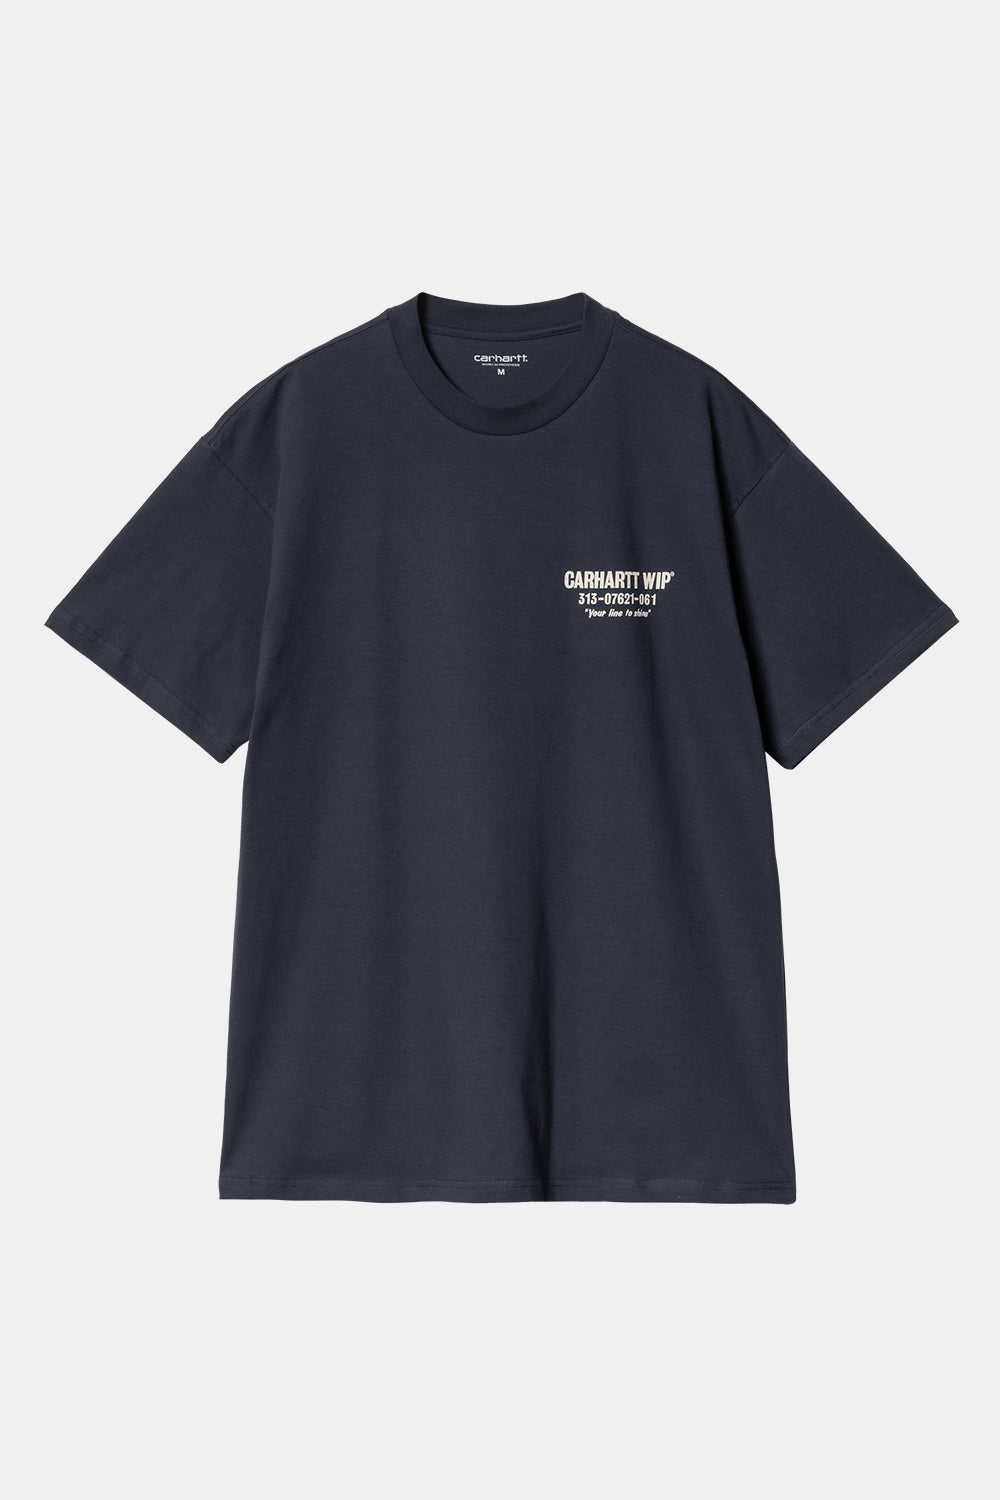 Carhartt WIP kortærmet Less Troubles T-shirt (blå/voks)